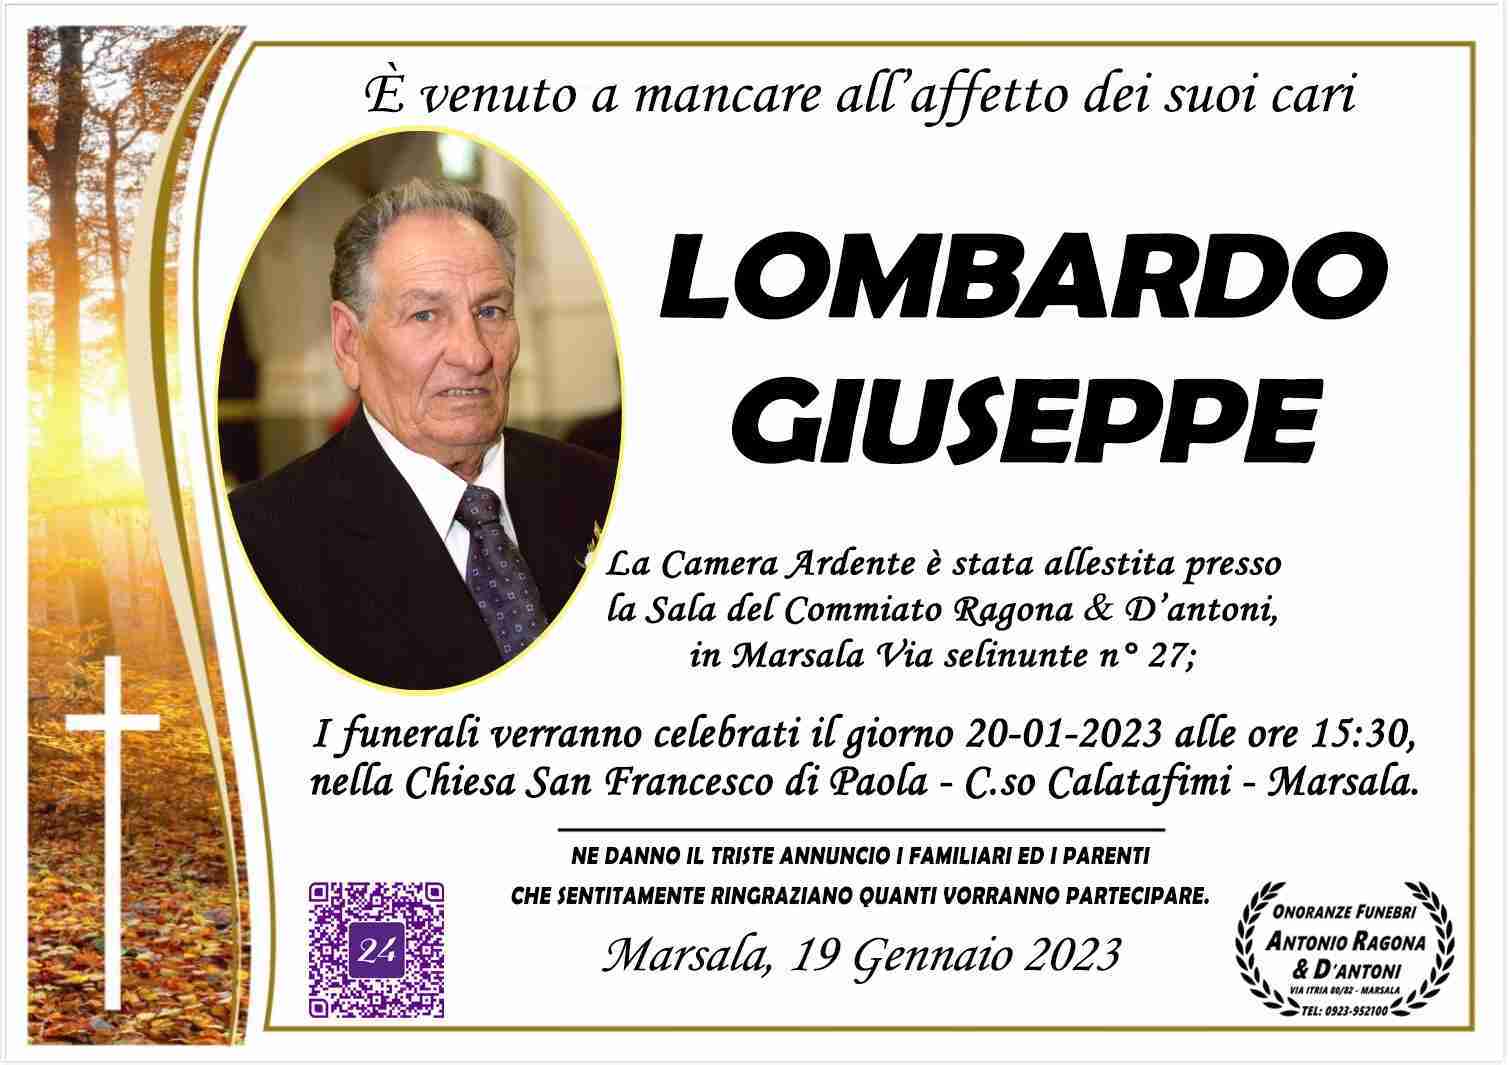 Giuseppe Lombardo